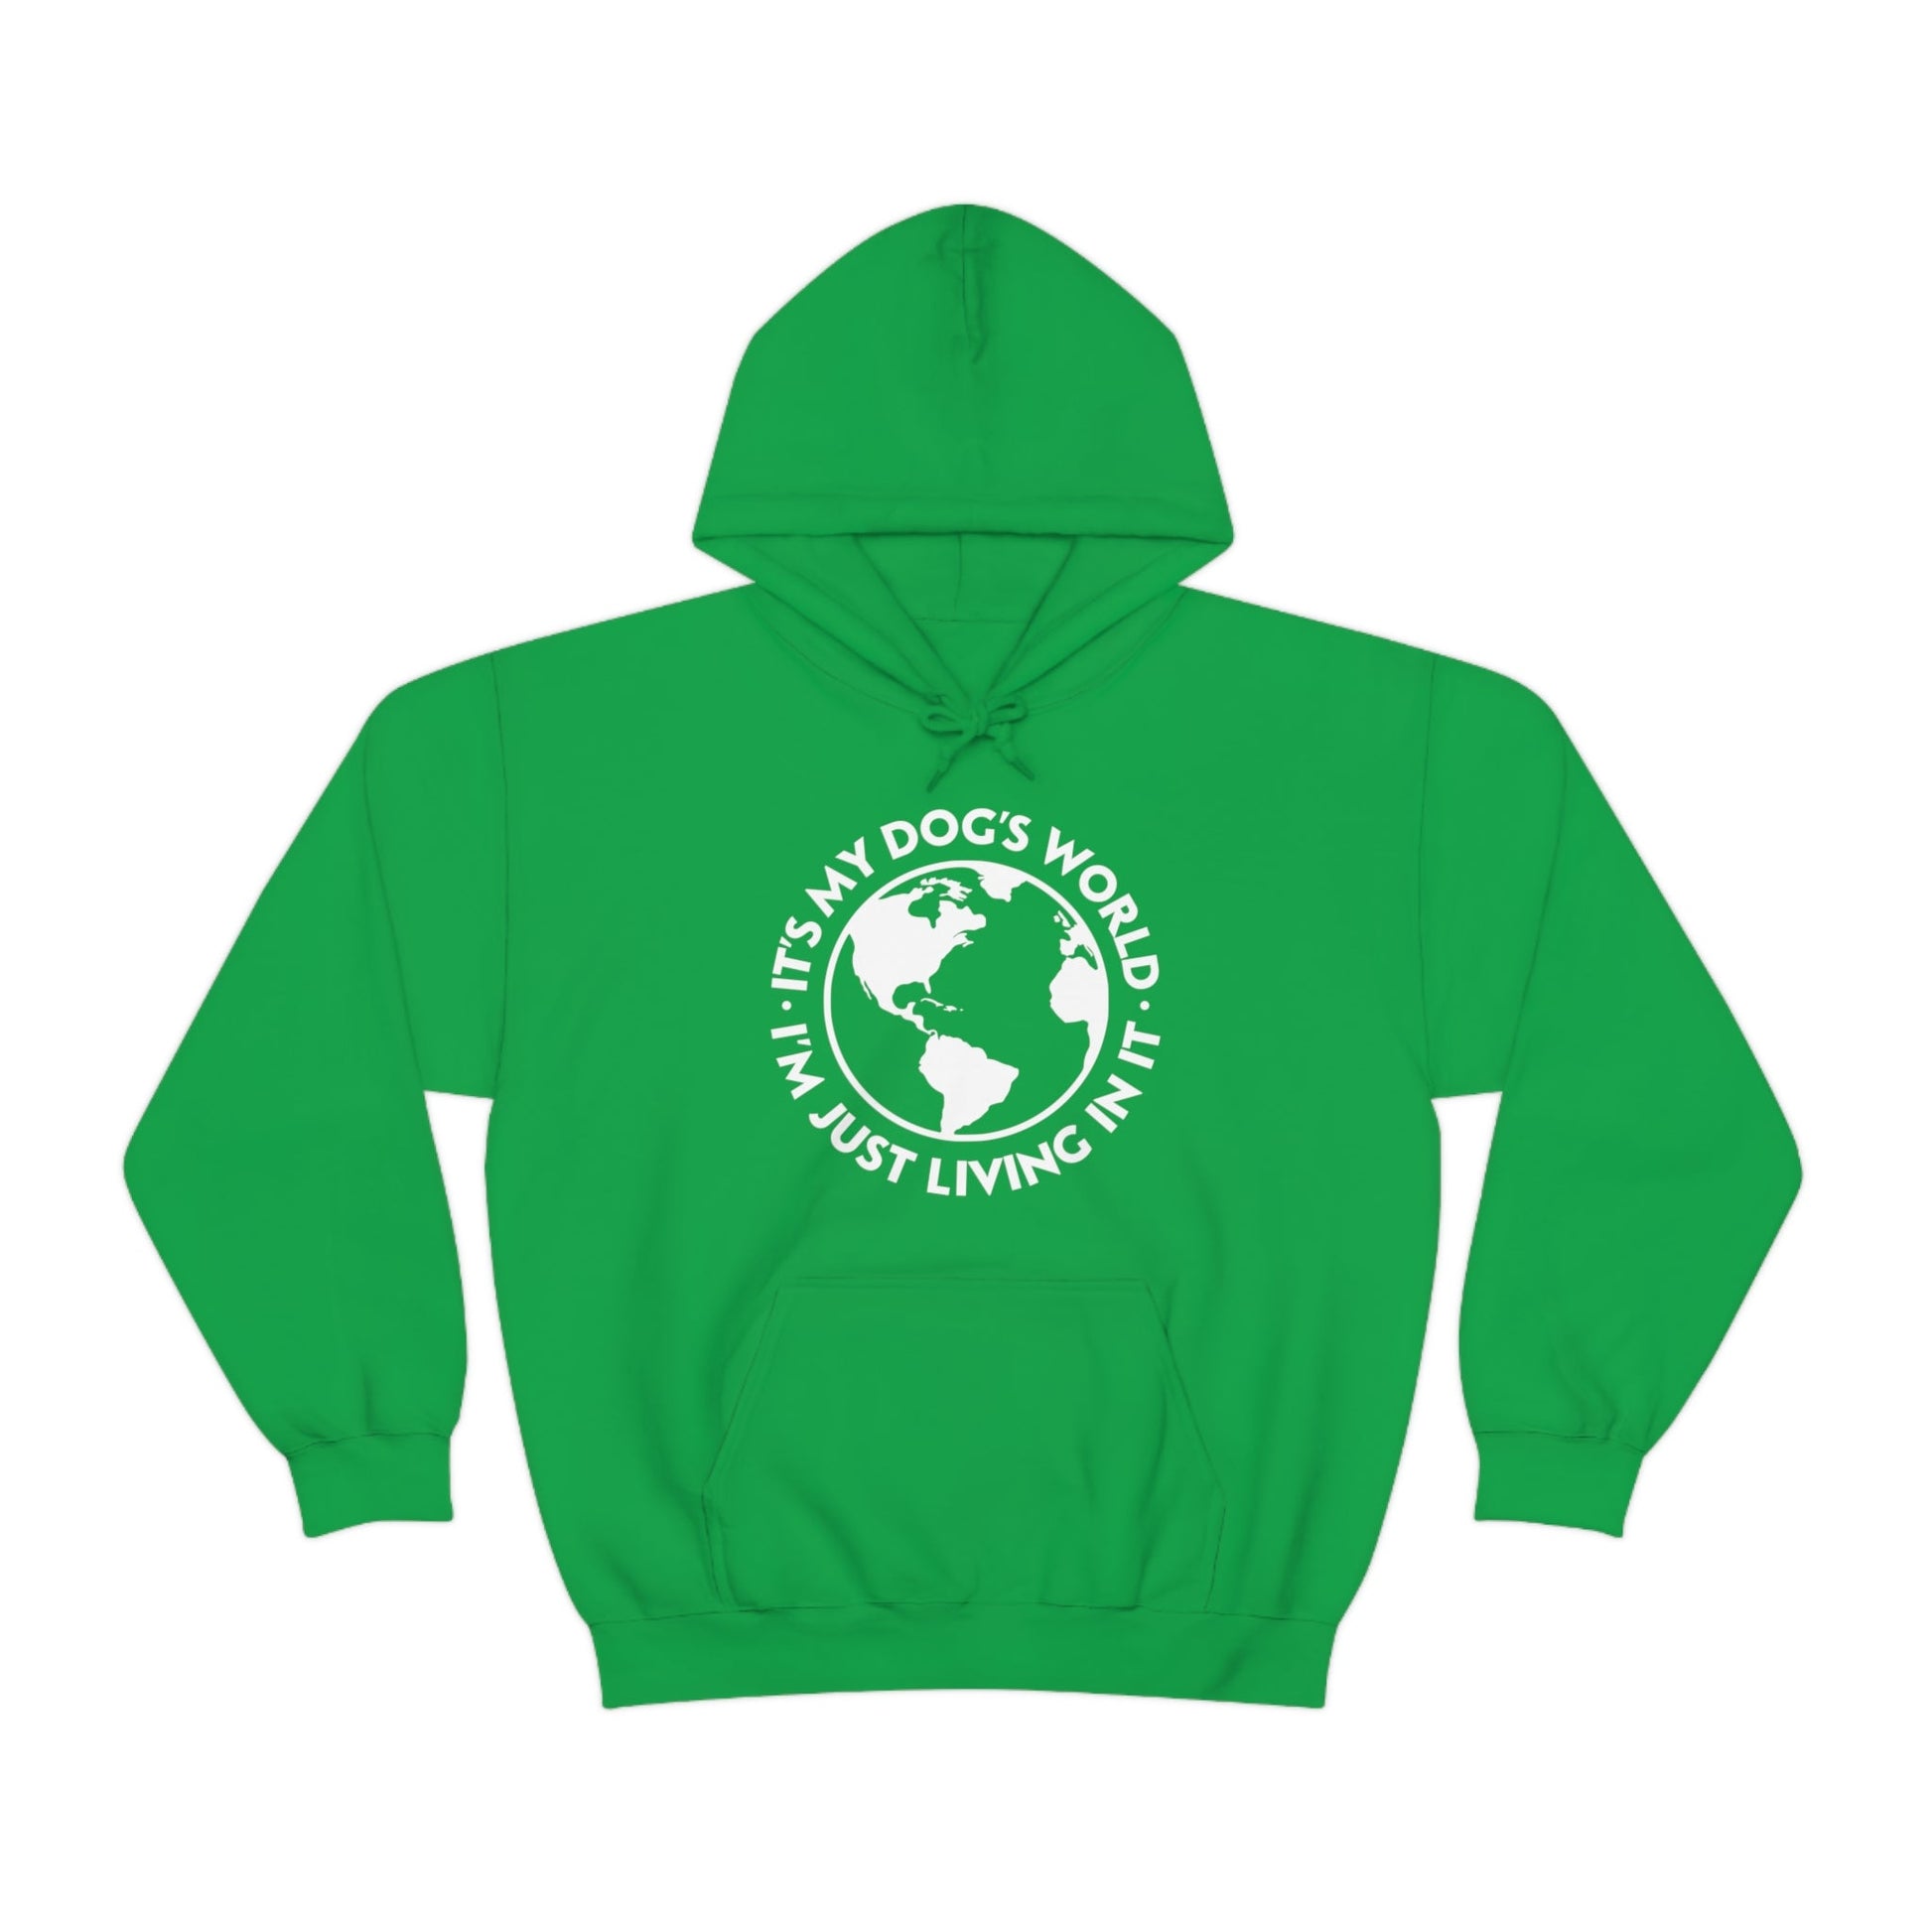 It's My Dog's World | Hooded Sweatshirt - Detezi Designs-25790424223539111823